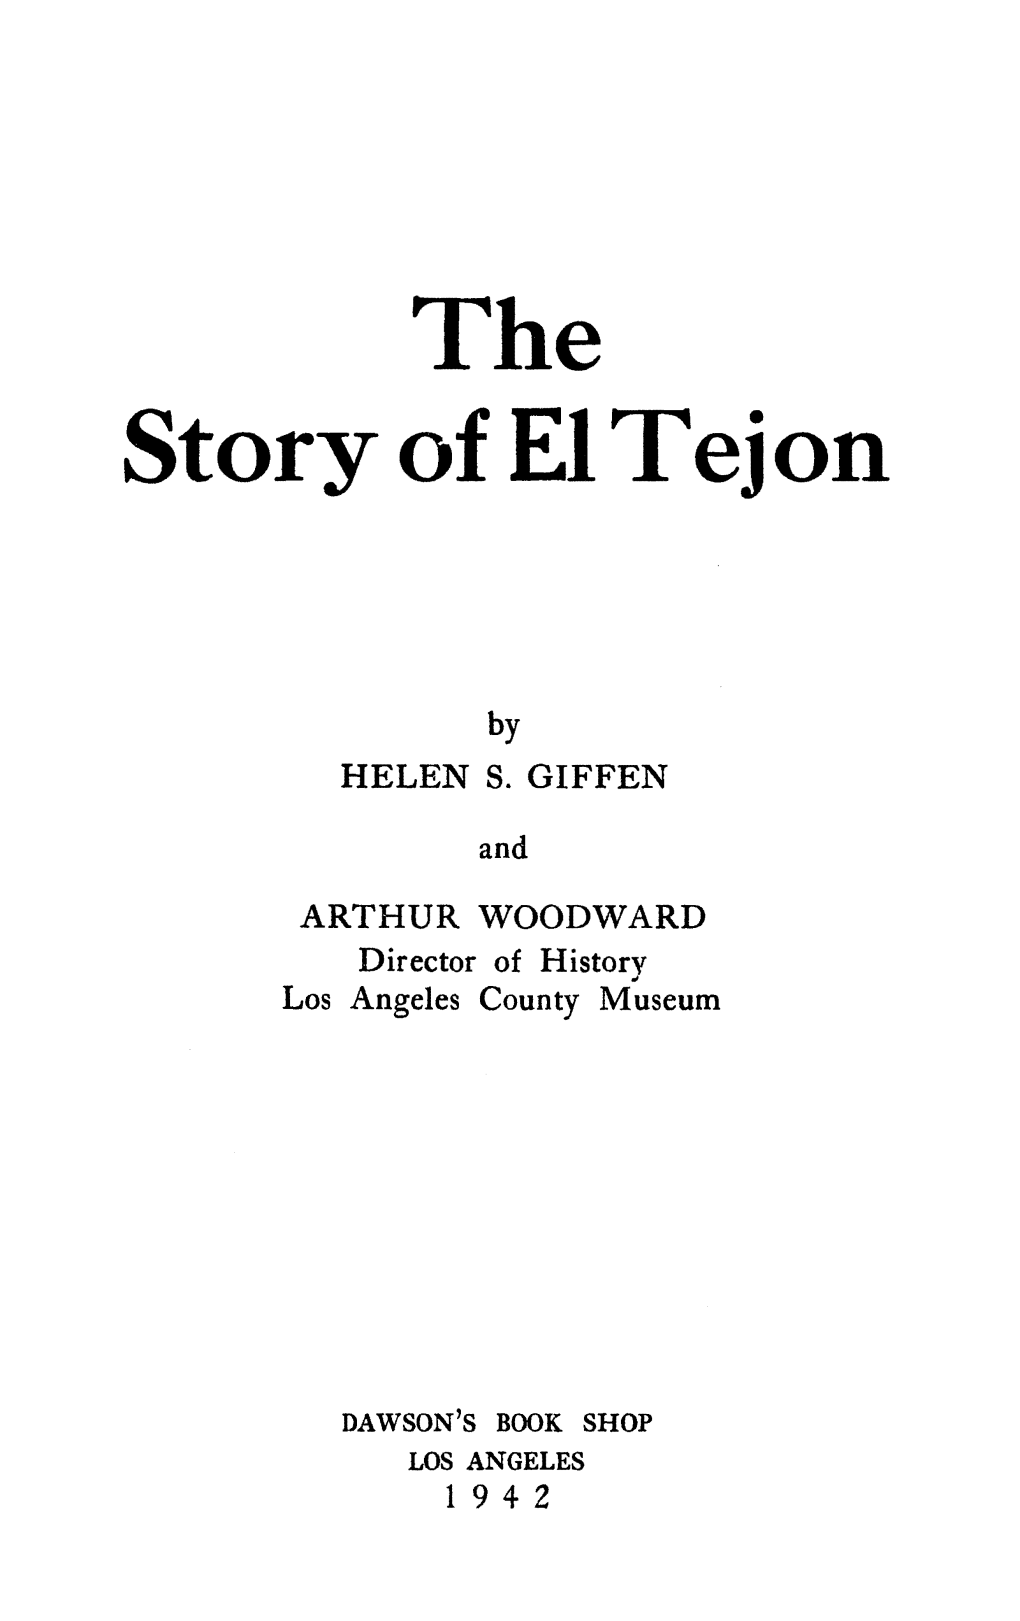 The Story of El Tejon